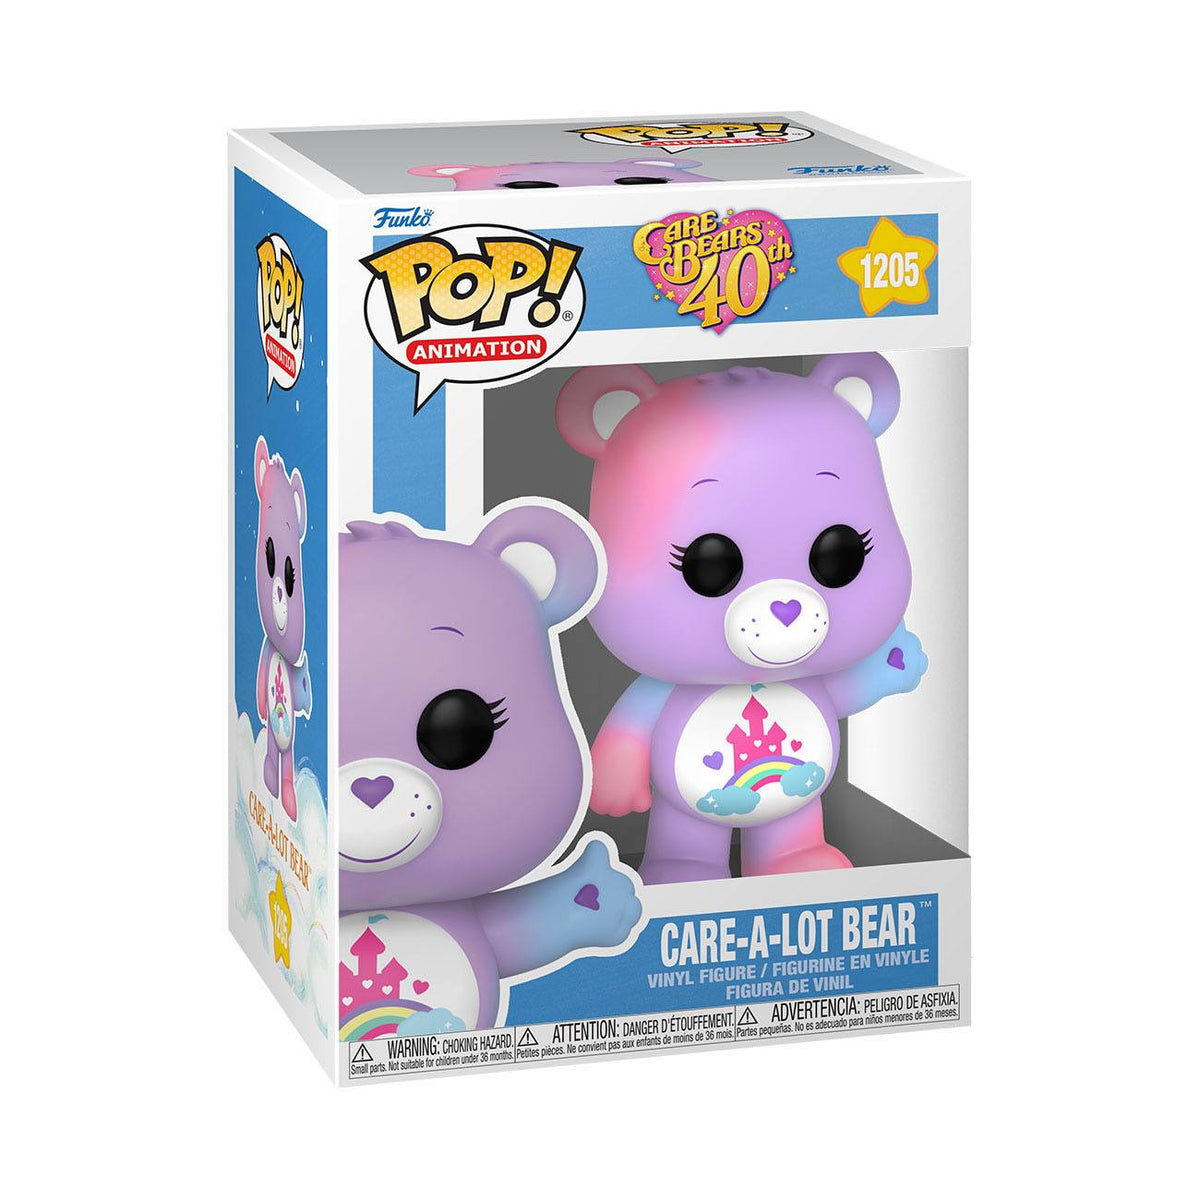 Care-a-Lot Bear - Care Bears 40th Anniversary - Funko POP!